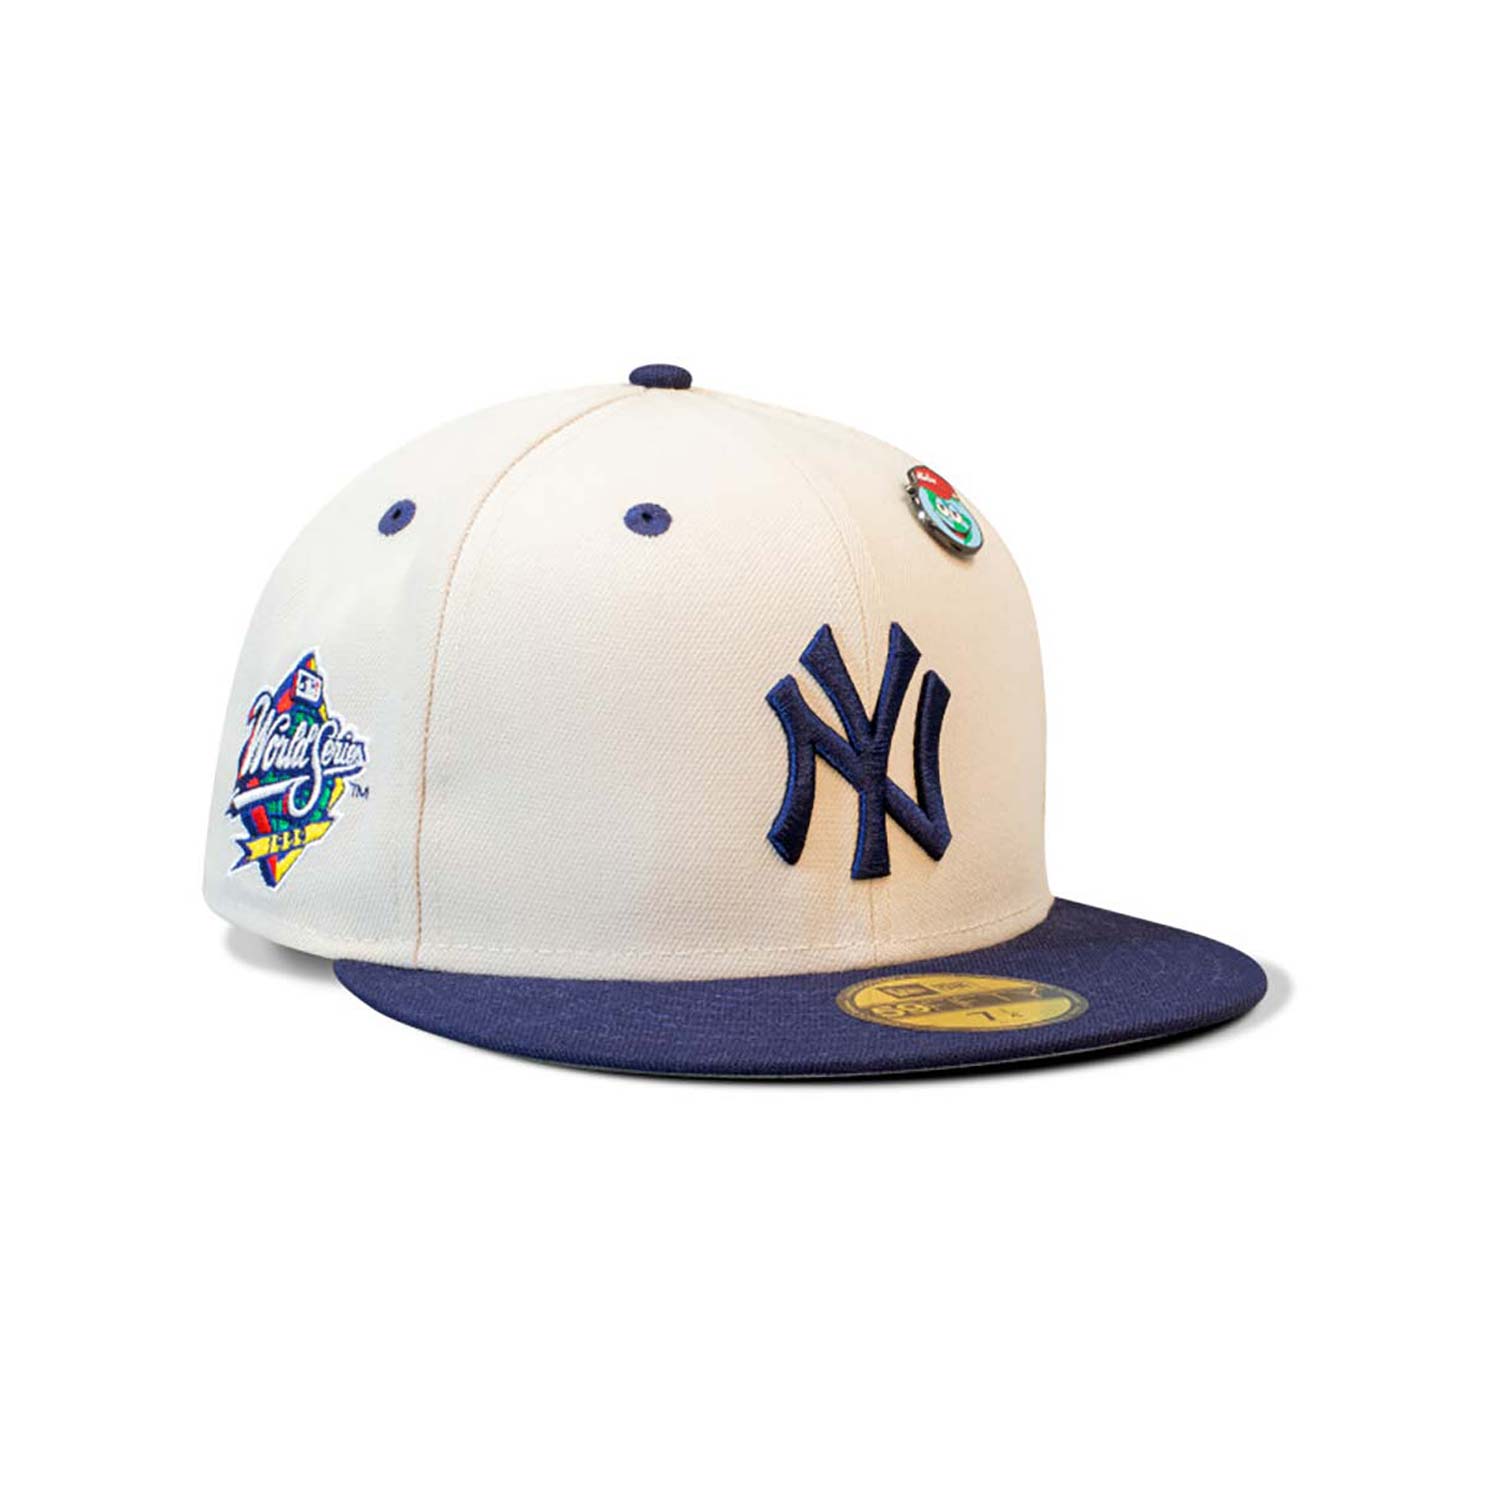 New York Yankees MLB League Essential Navy 39THIRTY Stretch Fit Cap  ESSENTIAL  New Era Cap PH